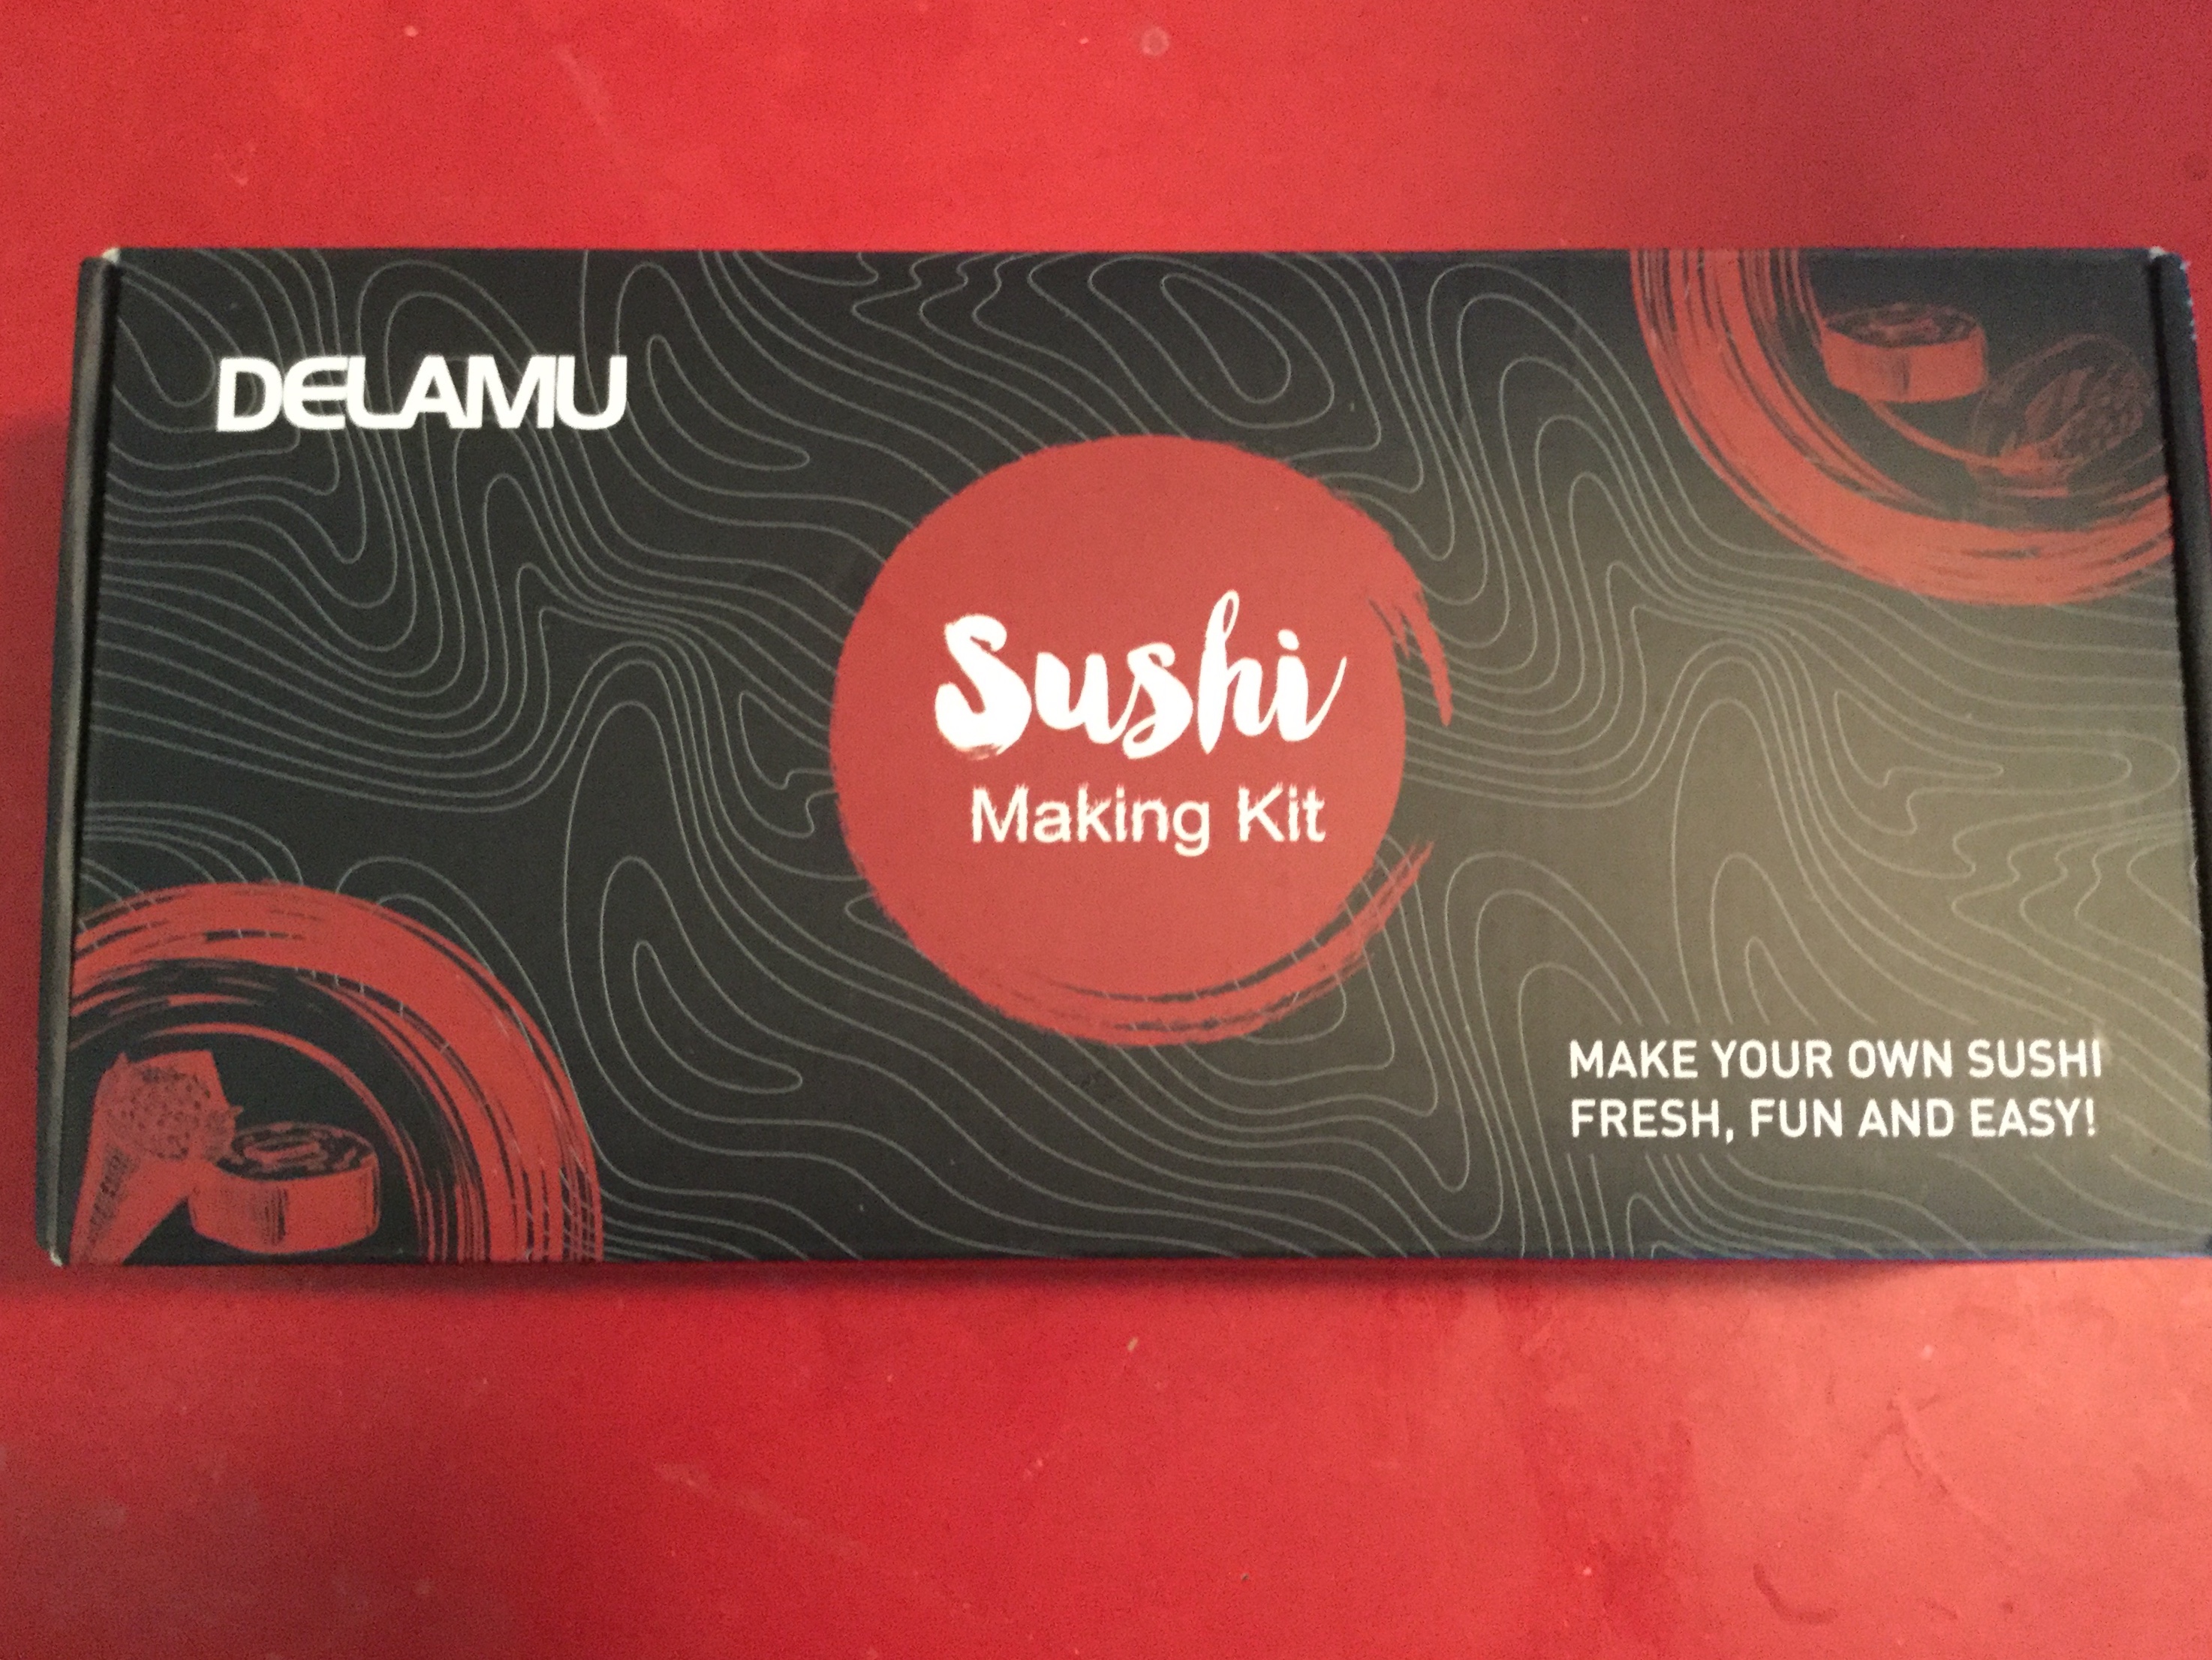 Sushi Making Kit, Delamu Upgrade 22 in 1 Sushi Maker Bazooker